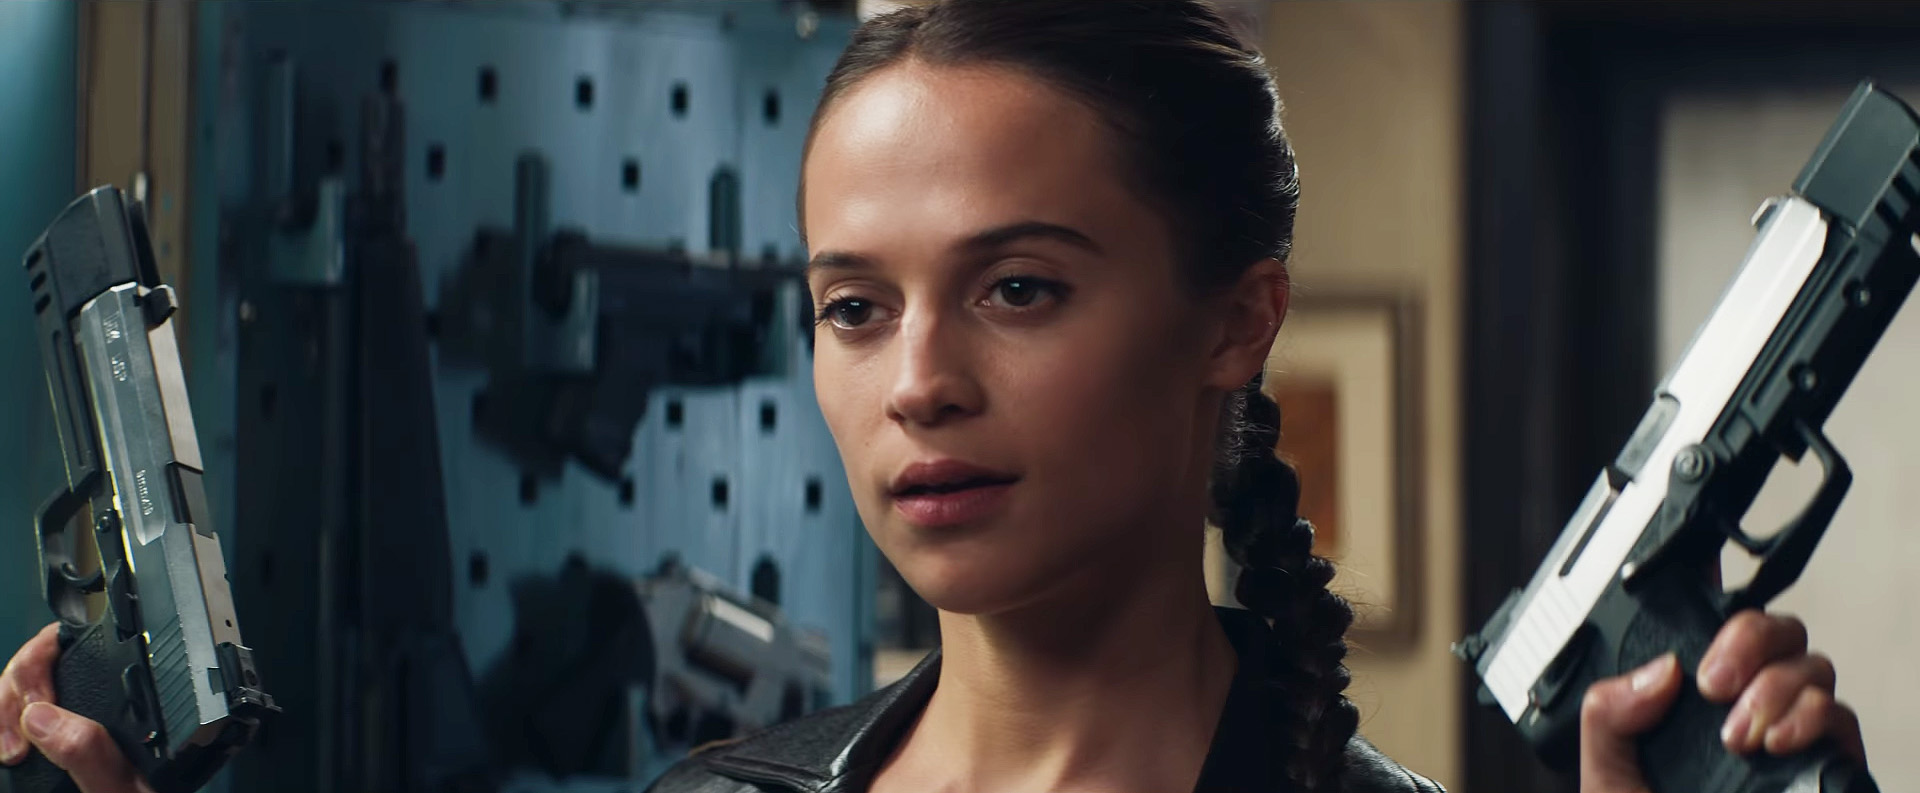 Tomb Raider Trailer: Alicia Vikander is Lara Croft